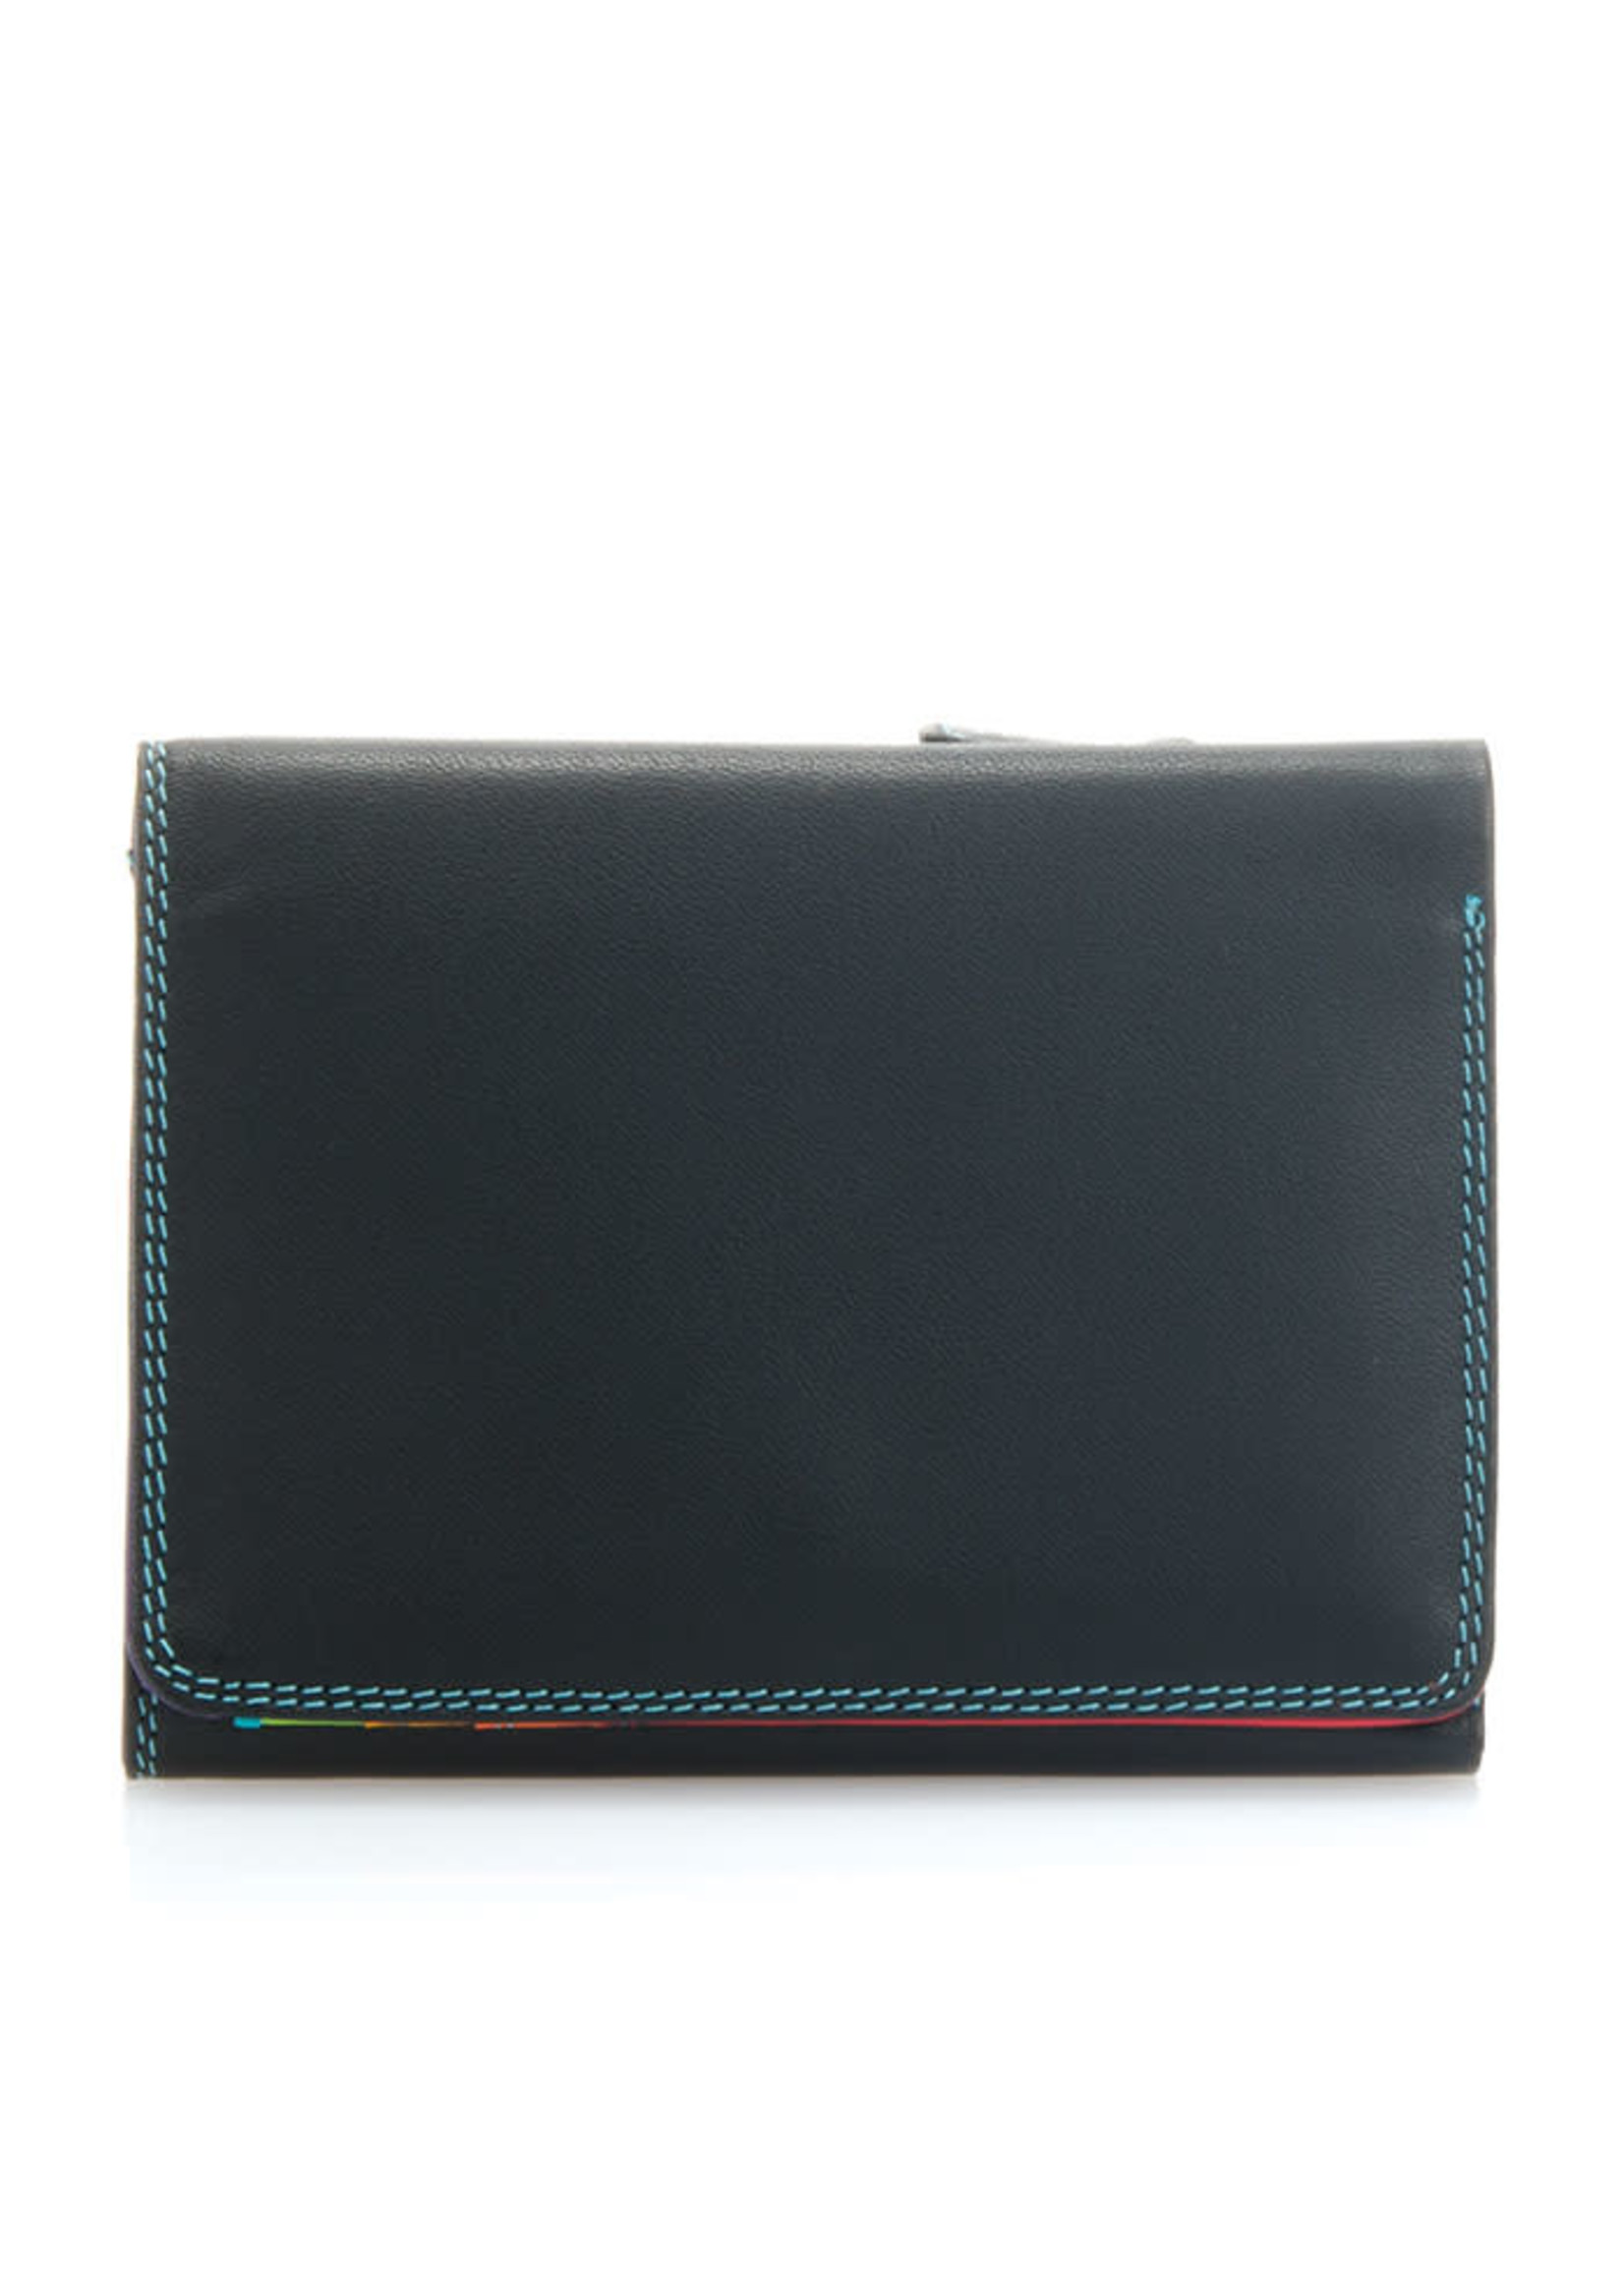 MyWalit Medium Tri-fold Wallet Black Pace